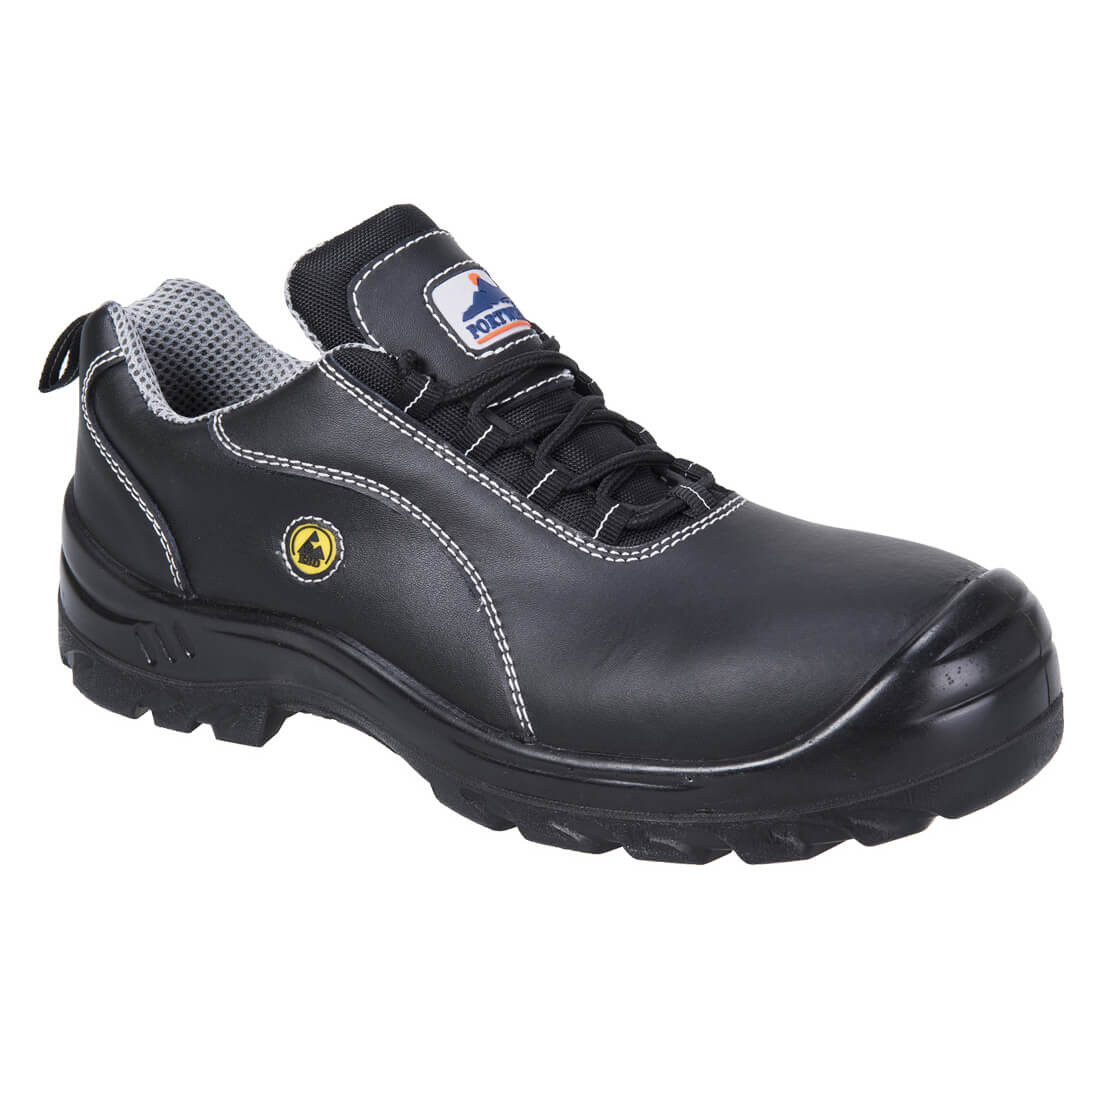 Chaussure Composite ESD S1 - Les chaussures de protection